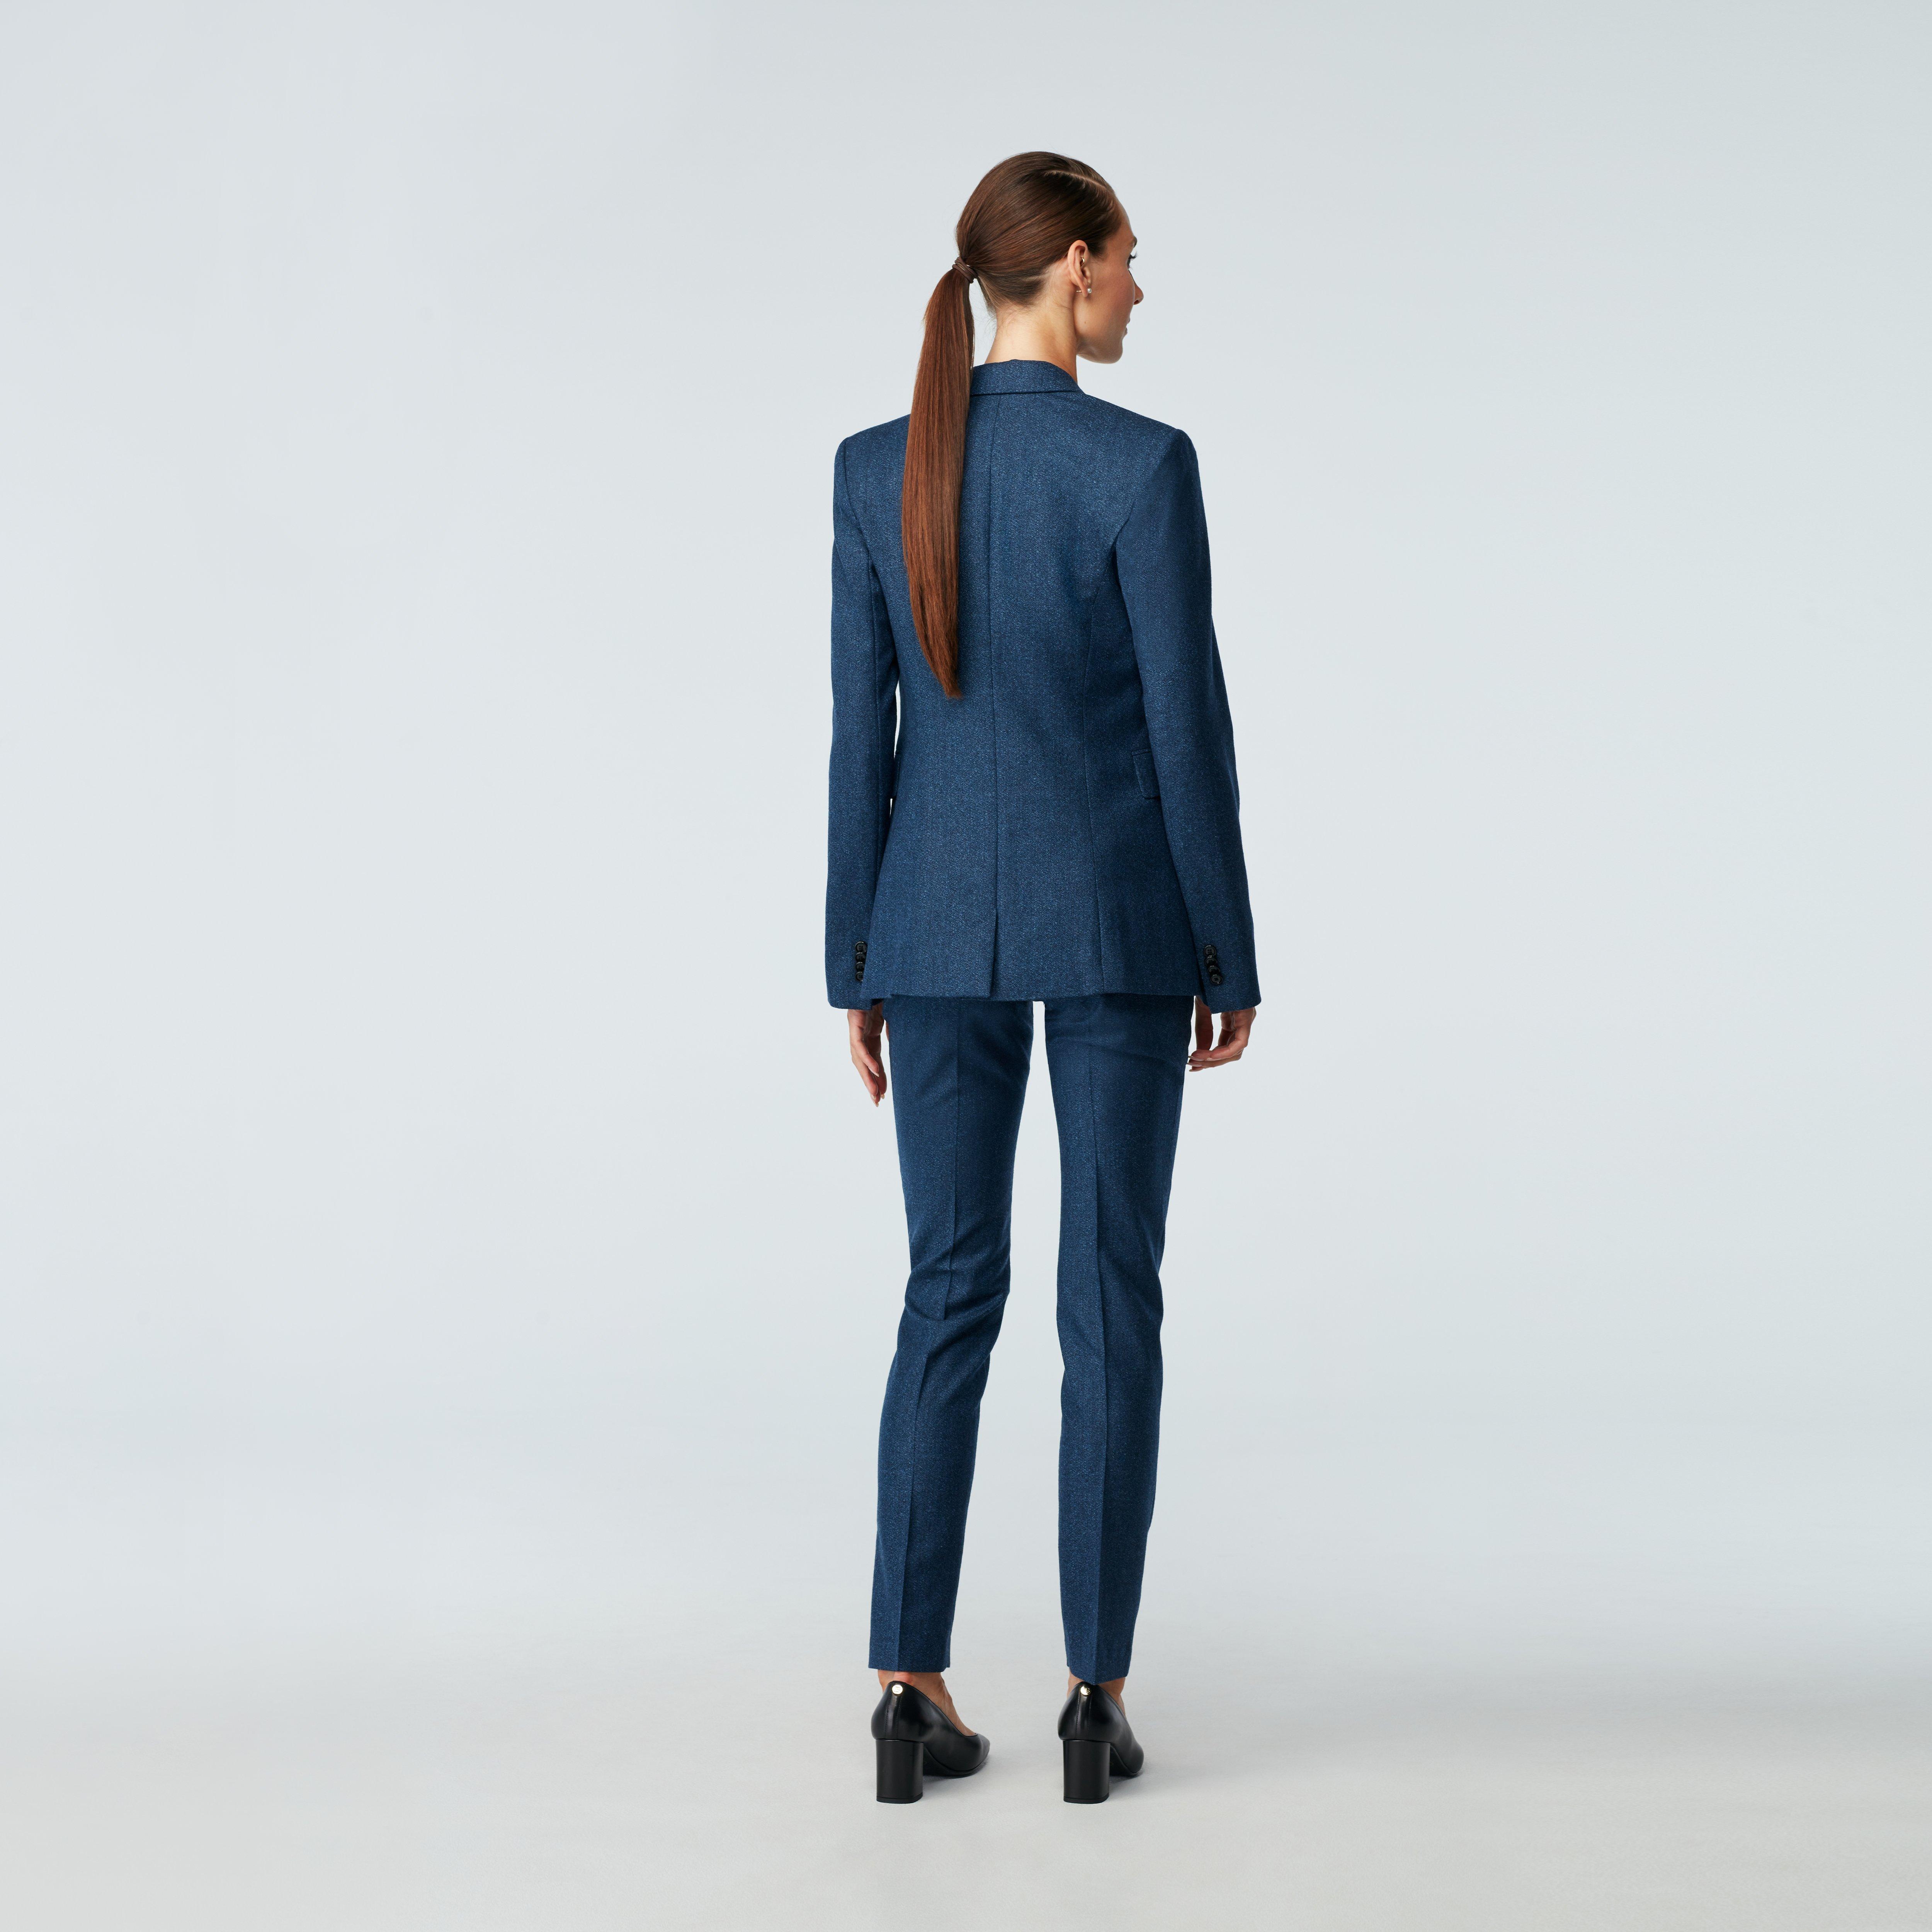 Custom Blazers Made For You - Monterosso Deep Blue Blazer Women | INDOCHINO